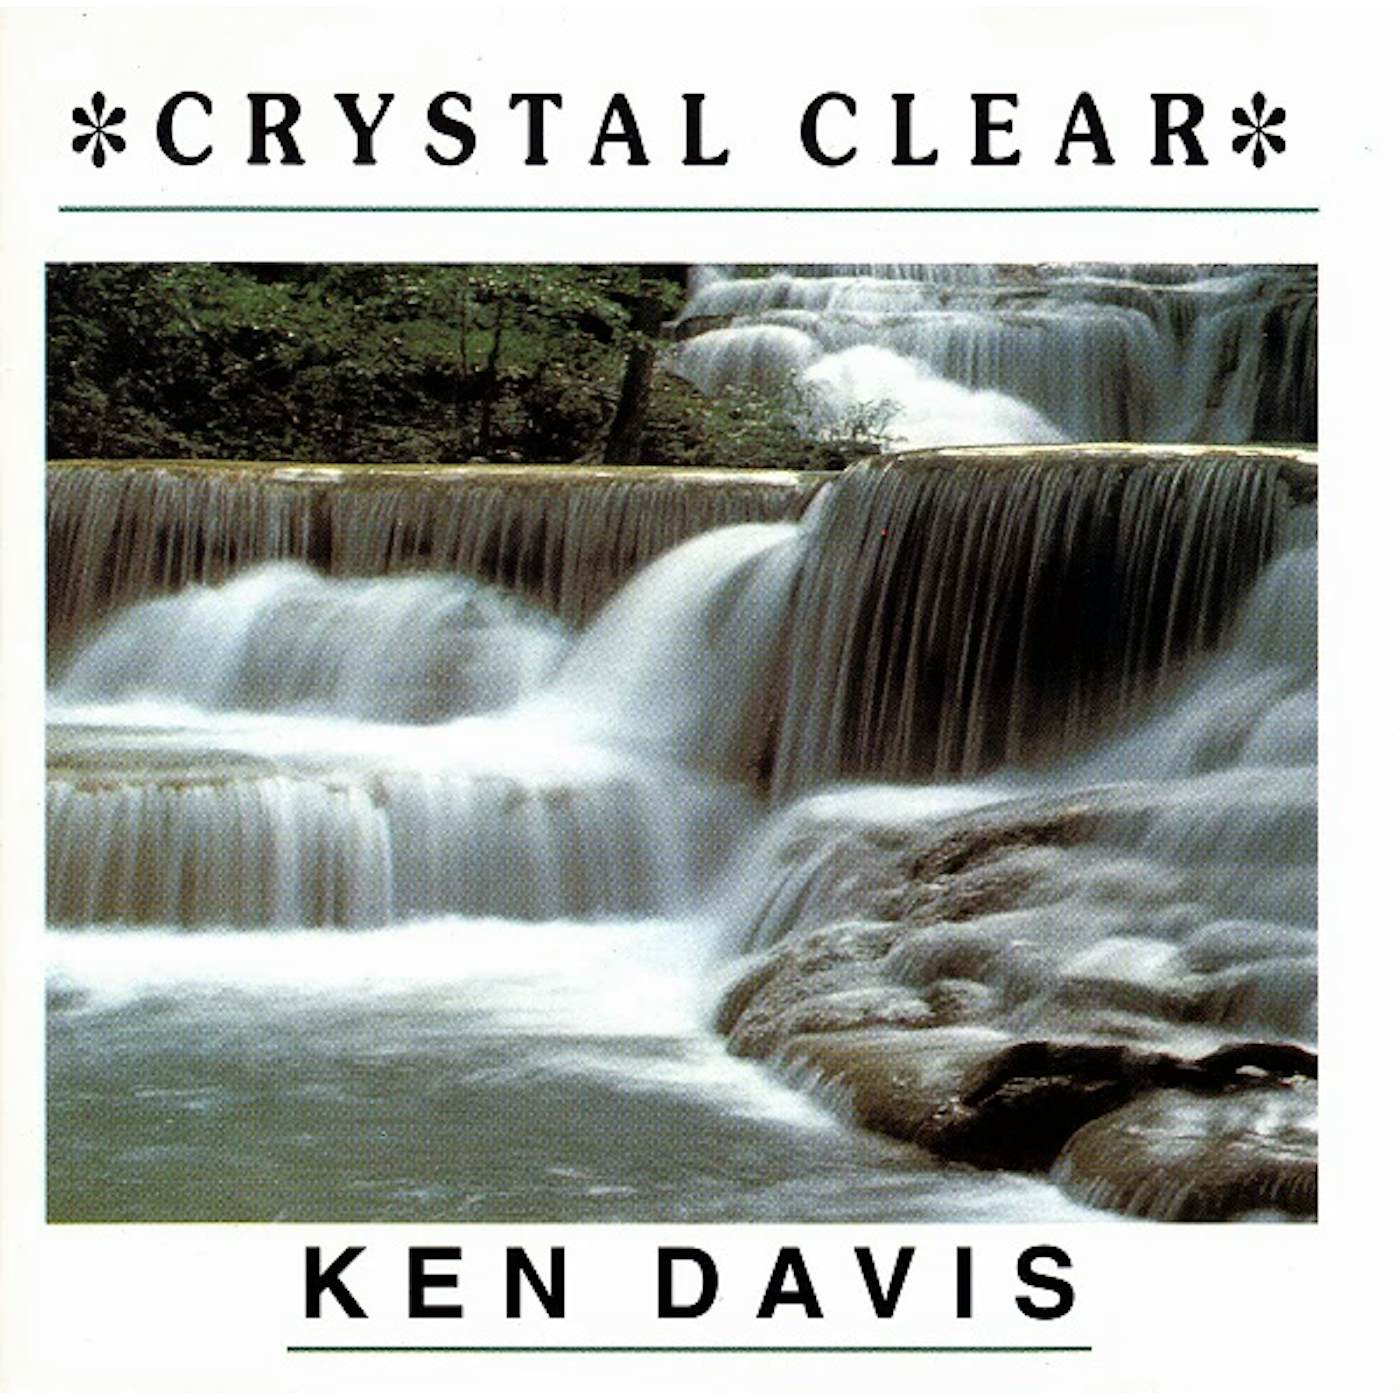 Ken Davis CRYSTAL CLEAR CD